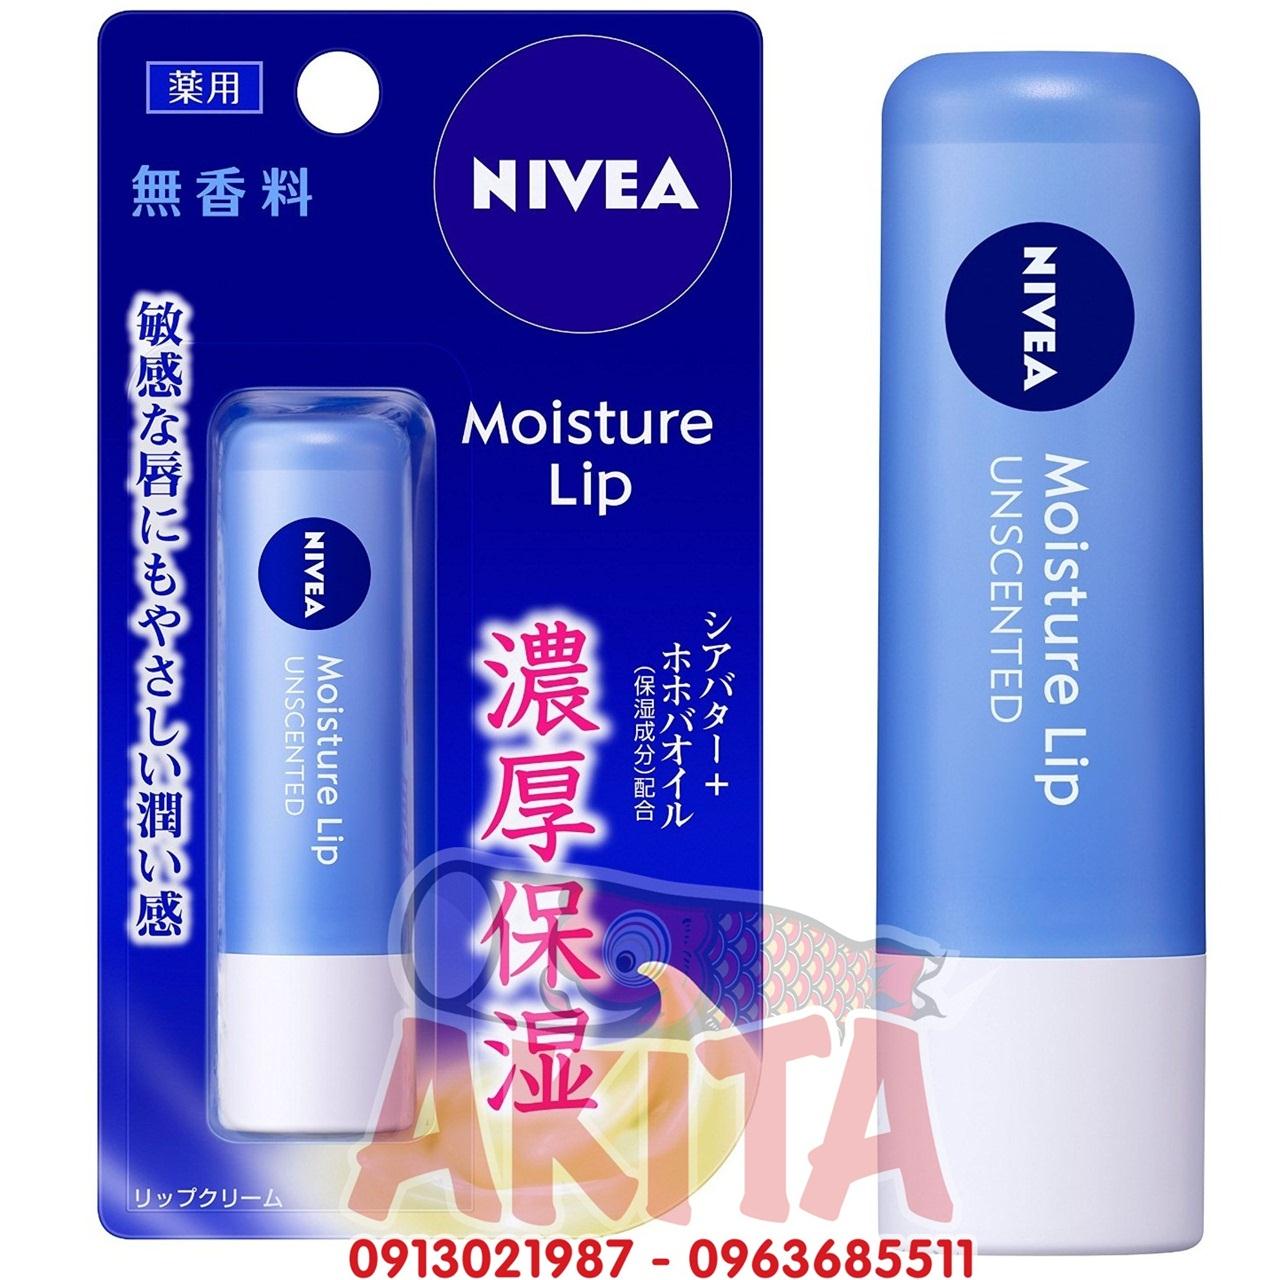 Nivea Moisture Lip - Unscented (không mùi)